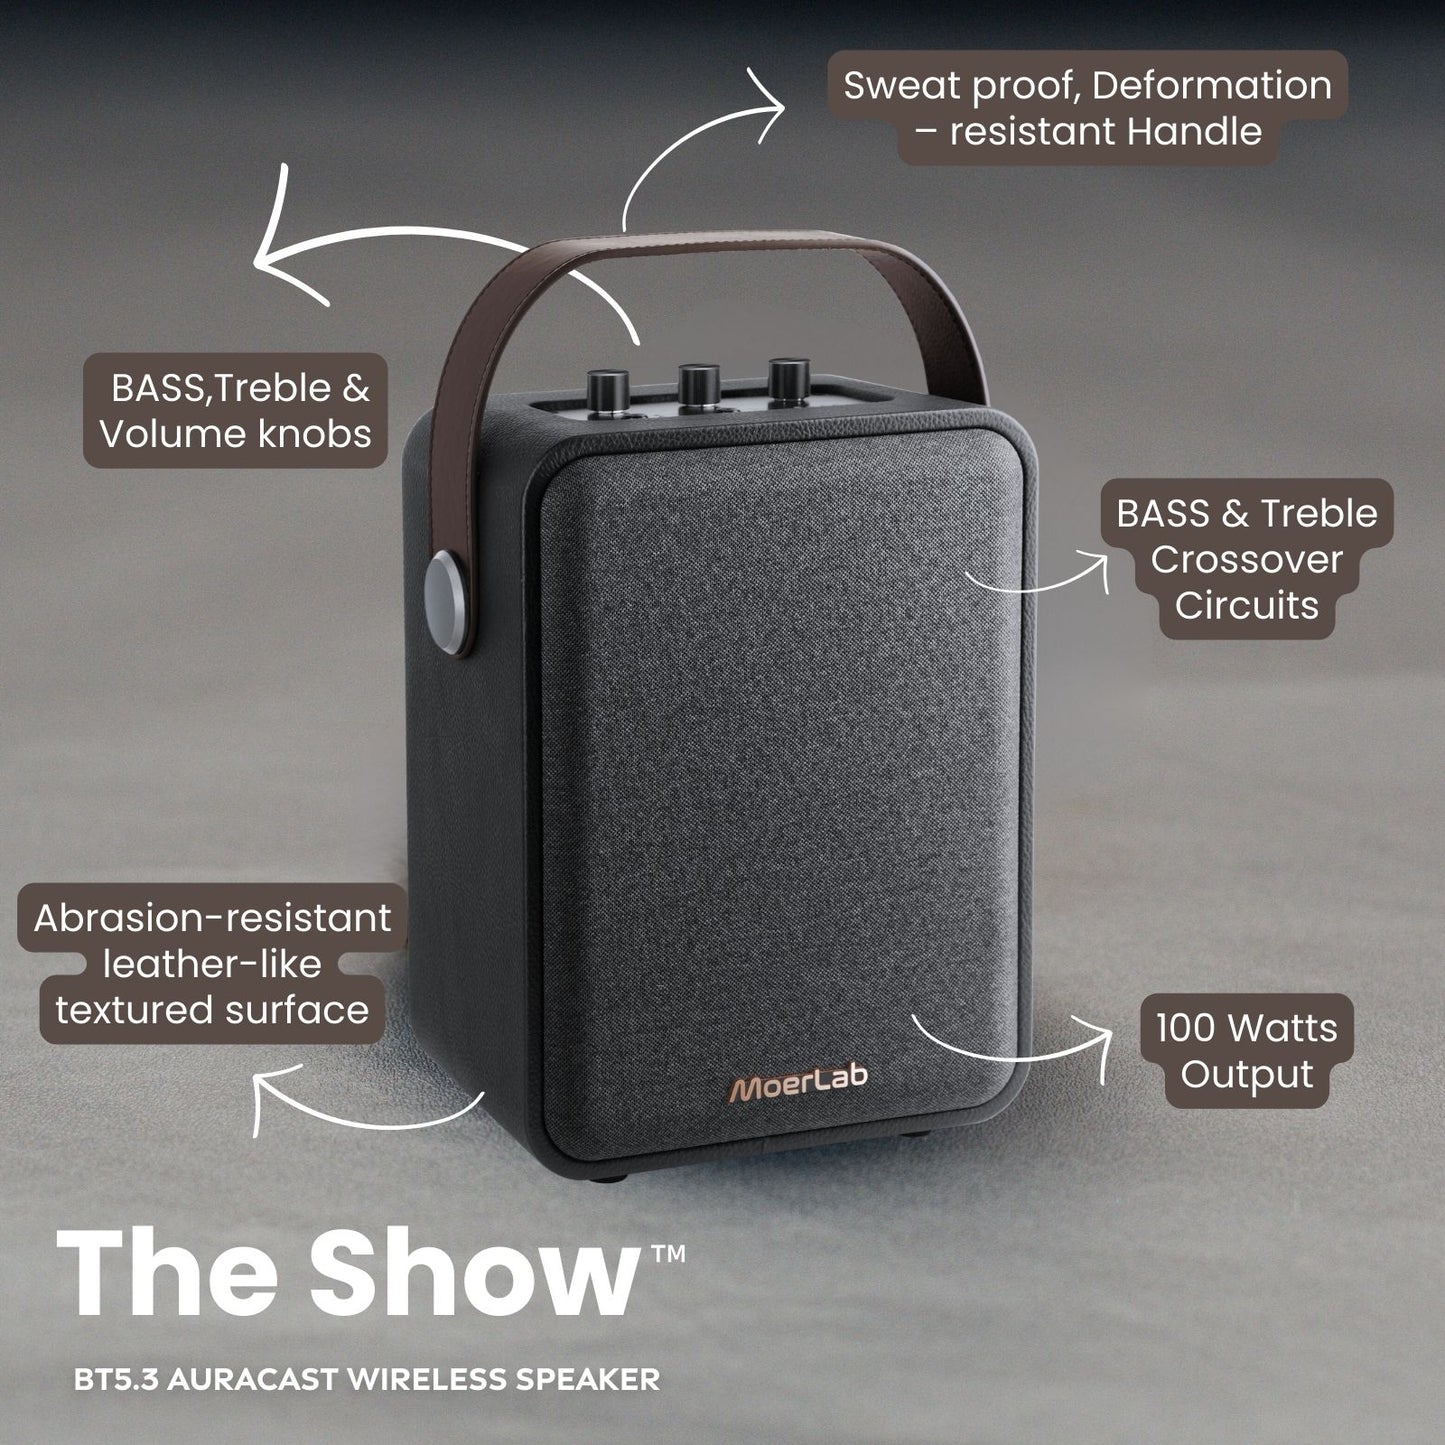 The Show™ Bluetooth Auracast Wireless Speaker